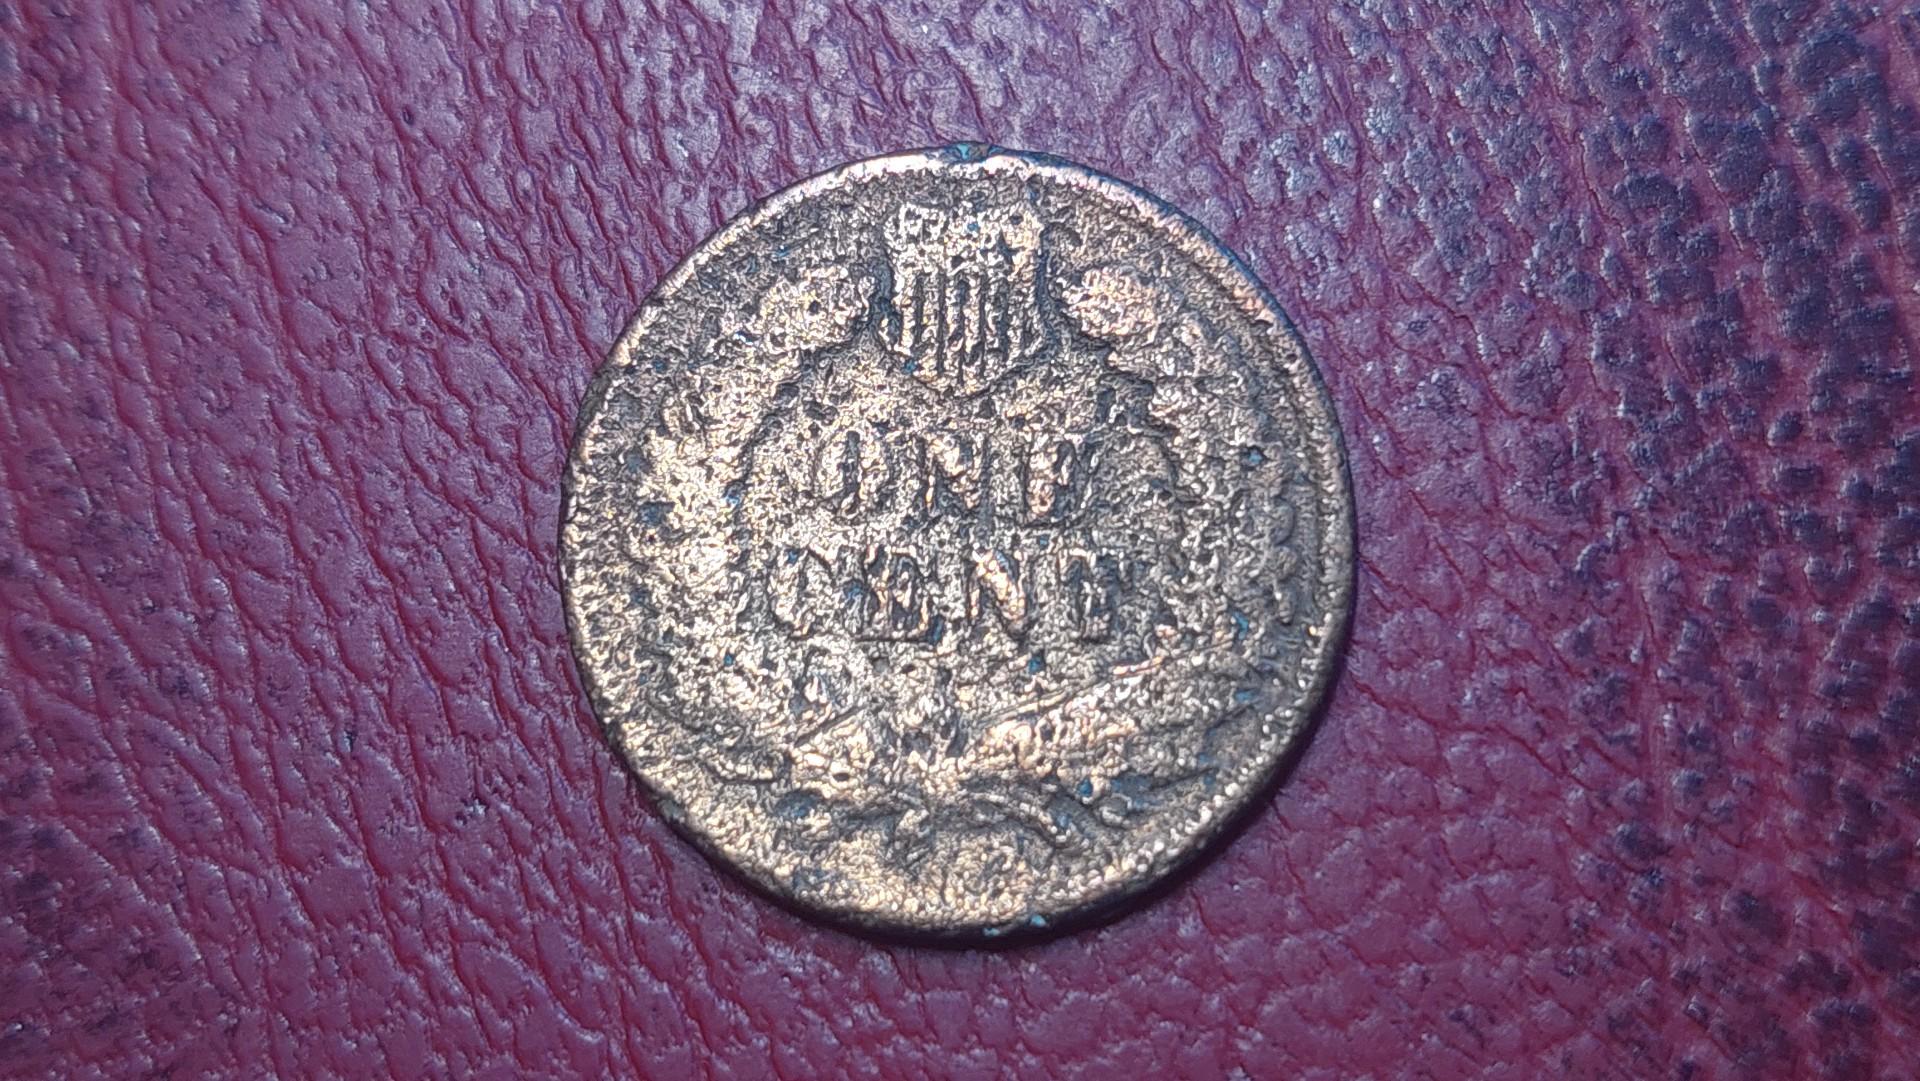 JAV 1 centas, 1901 KM# 90a Indėno galvos centas